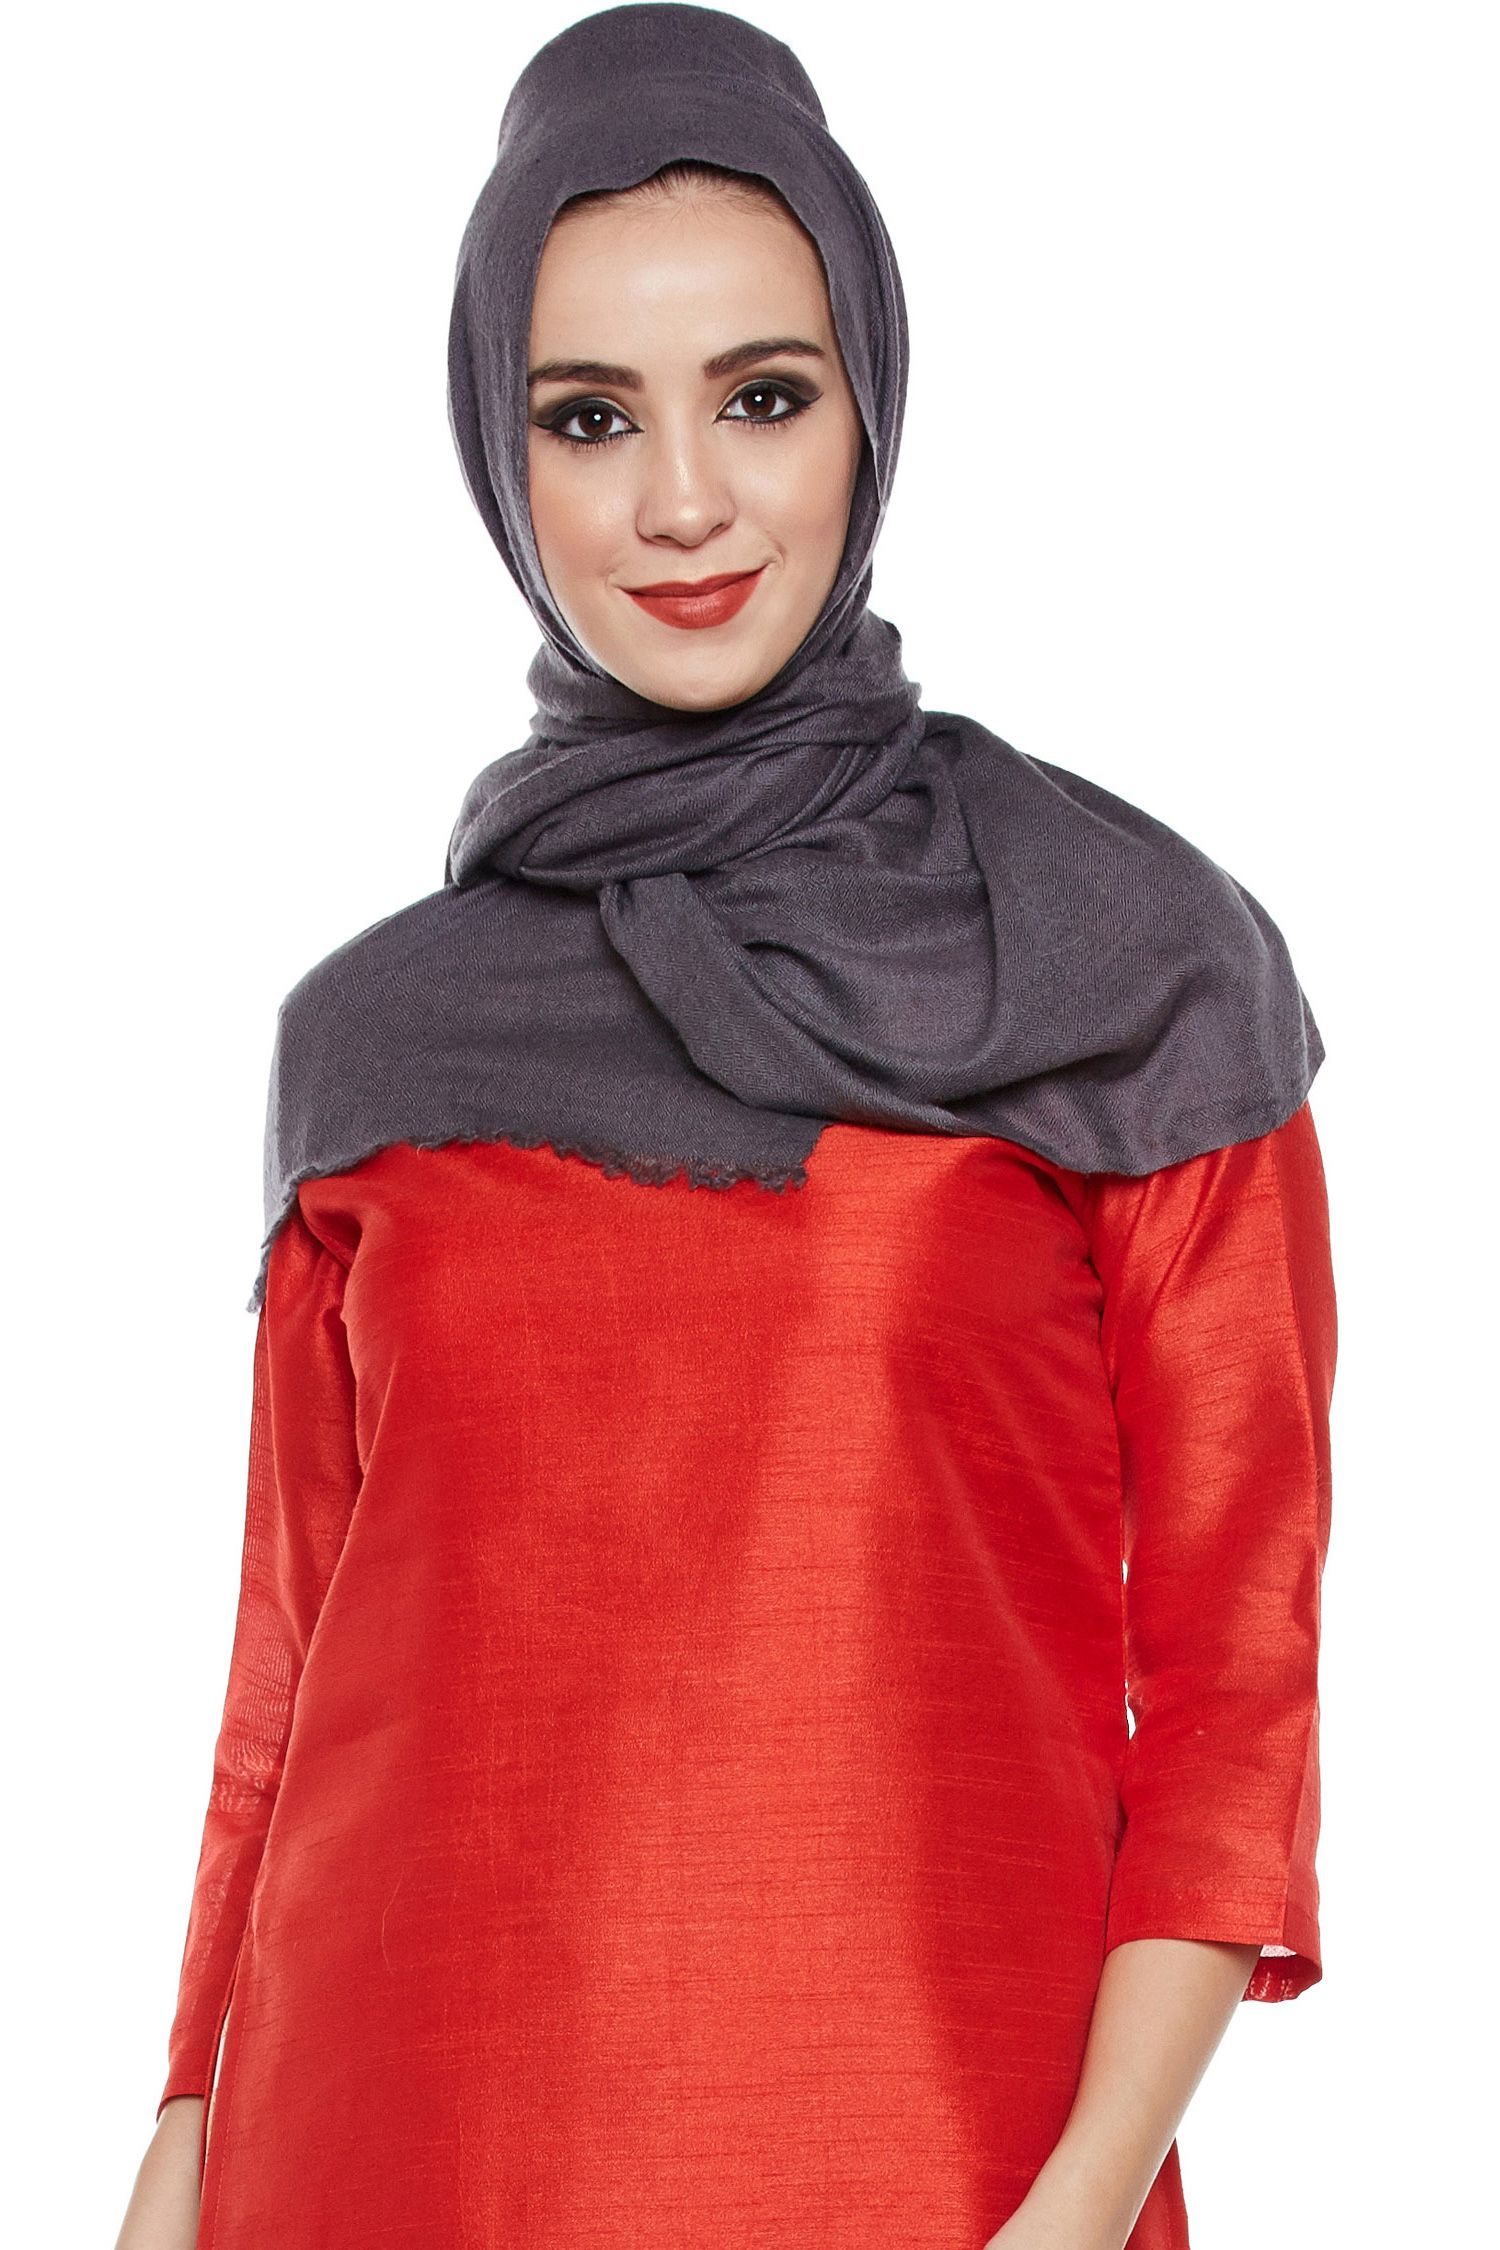 Dark Grey Pashmina Hijab | Handmade Cashmere Head Scarf